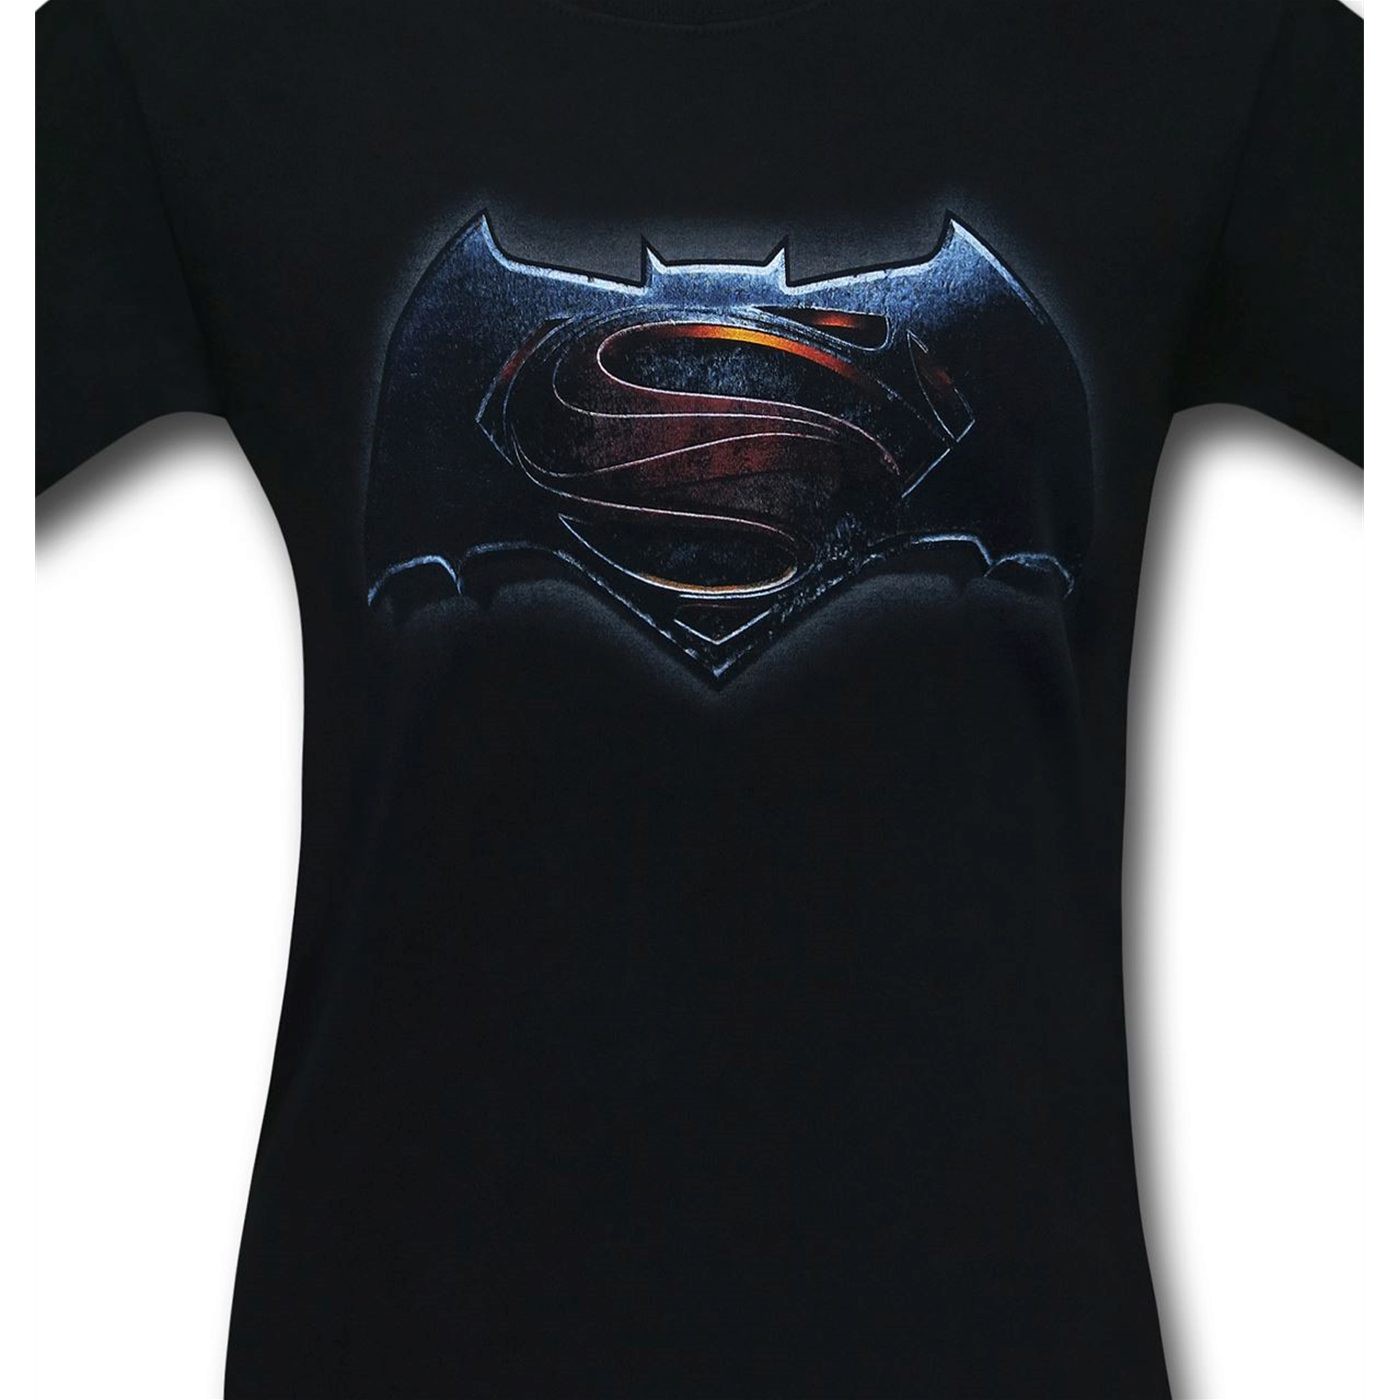 Batman Vs Superman Main Logo Black T-Shirt